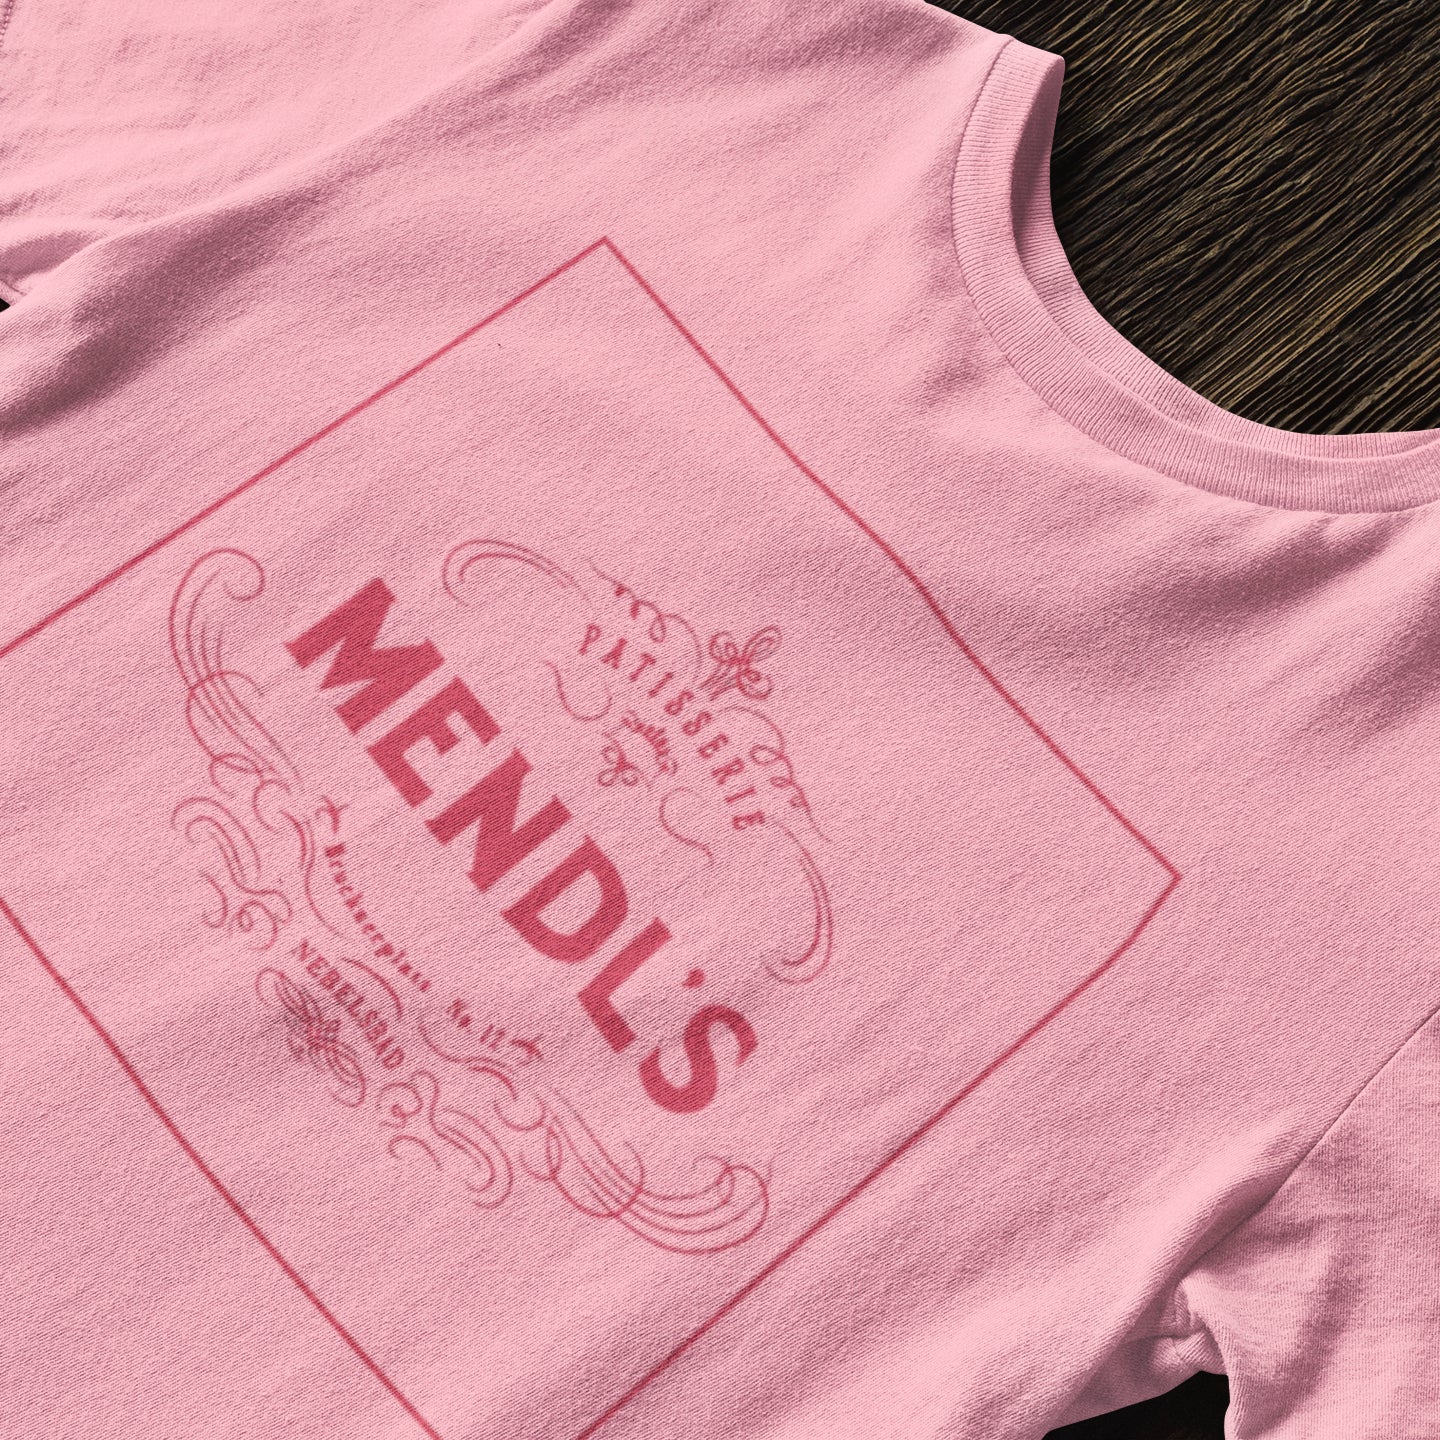 Mendl's The Grand Budapest Hotel - T-Shirt